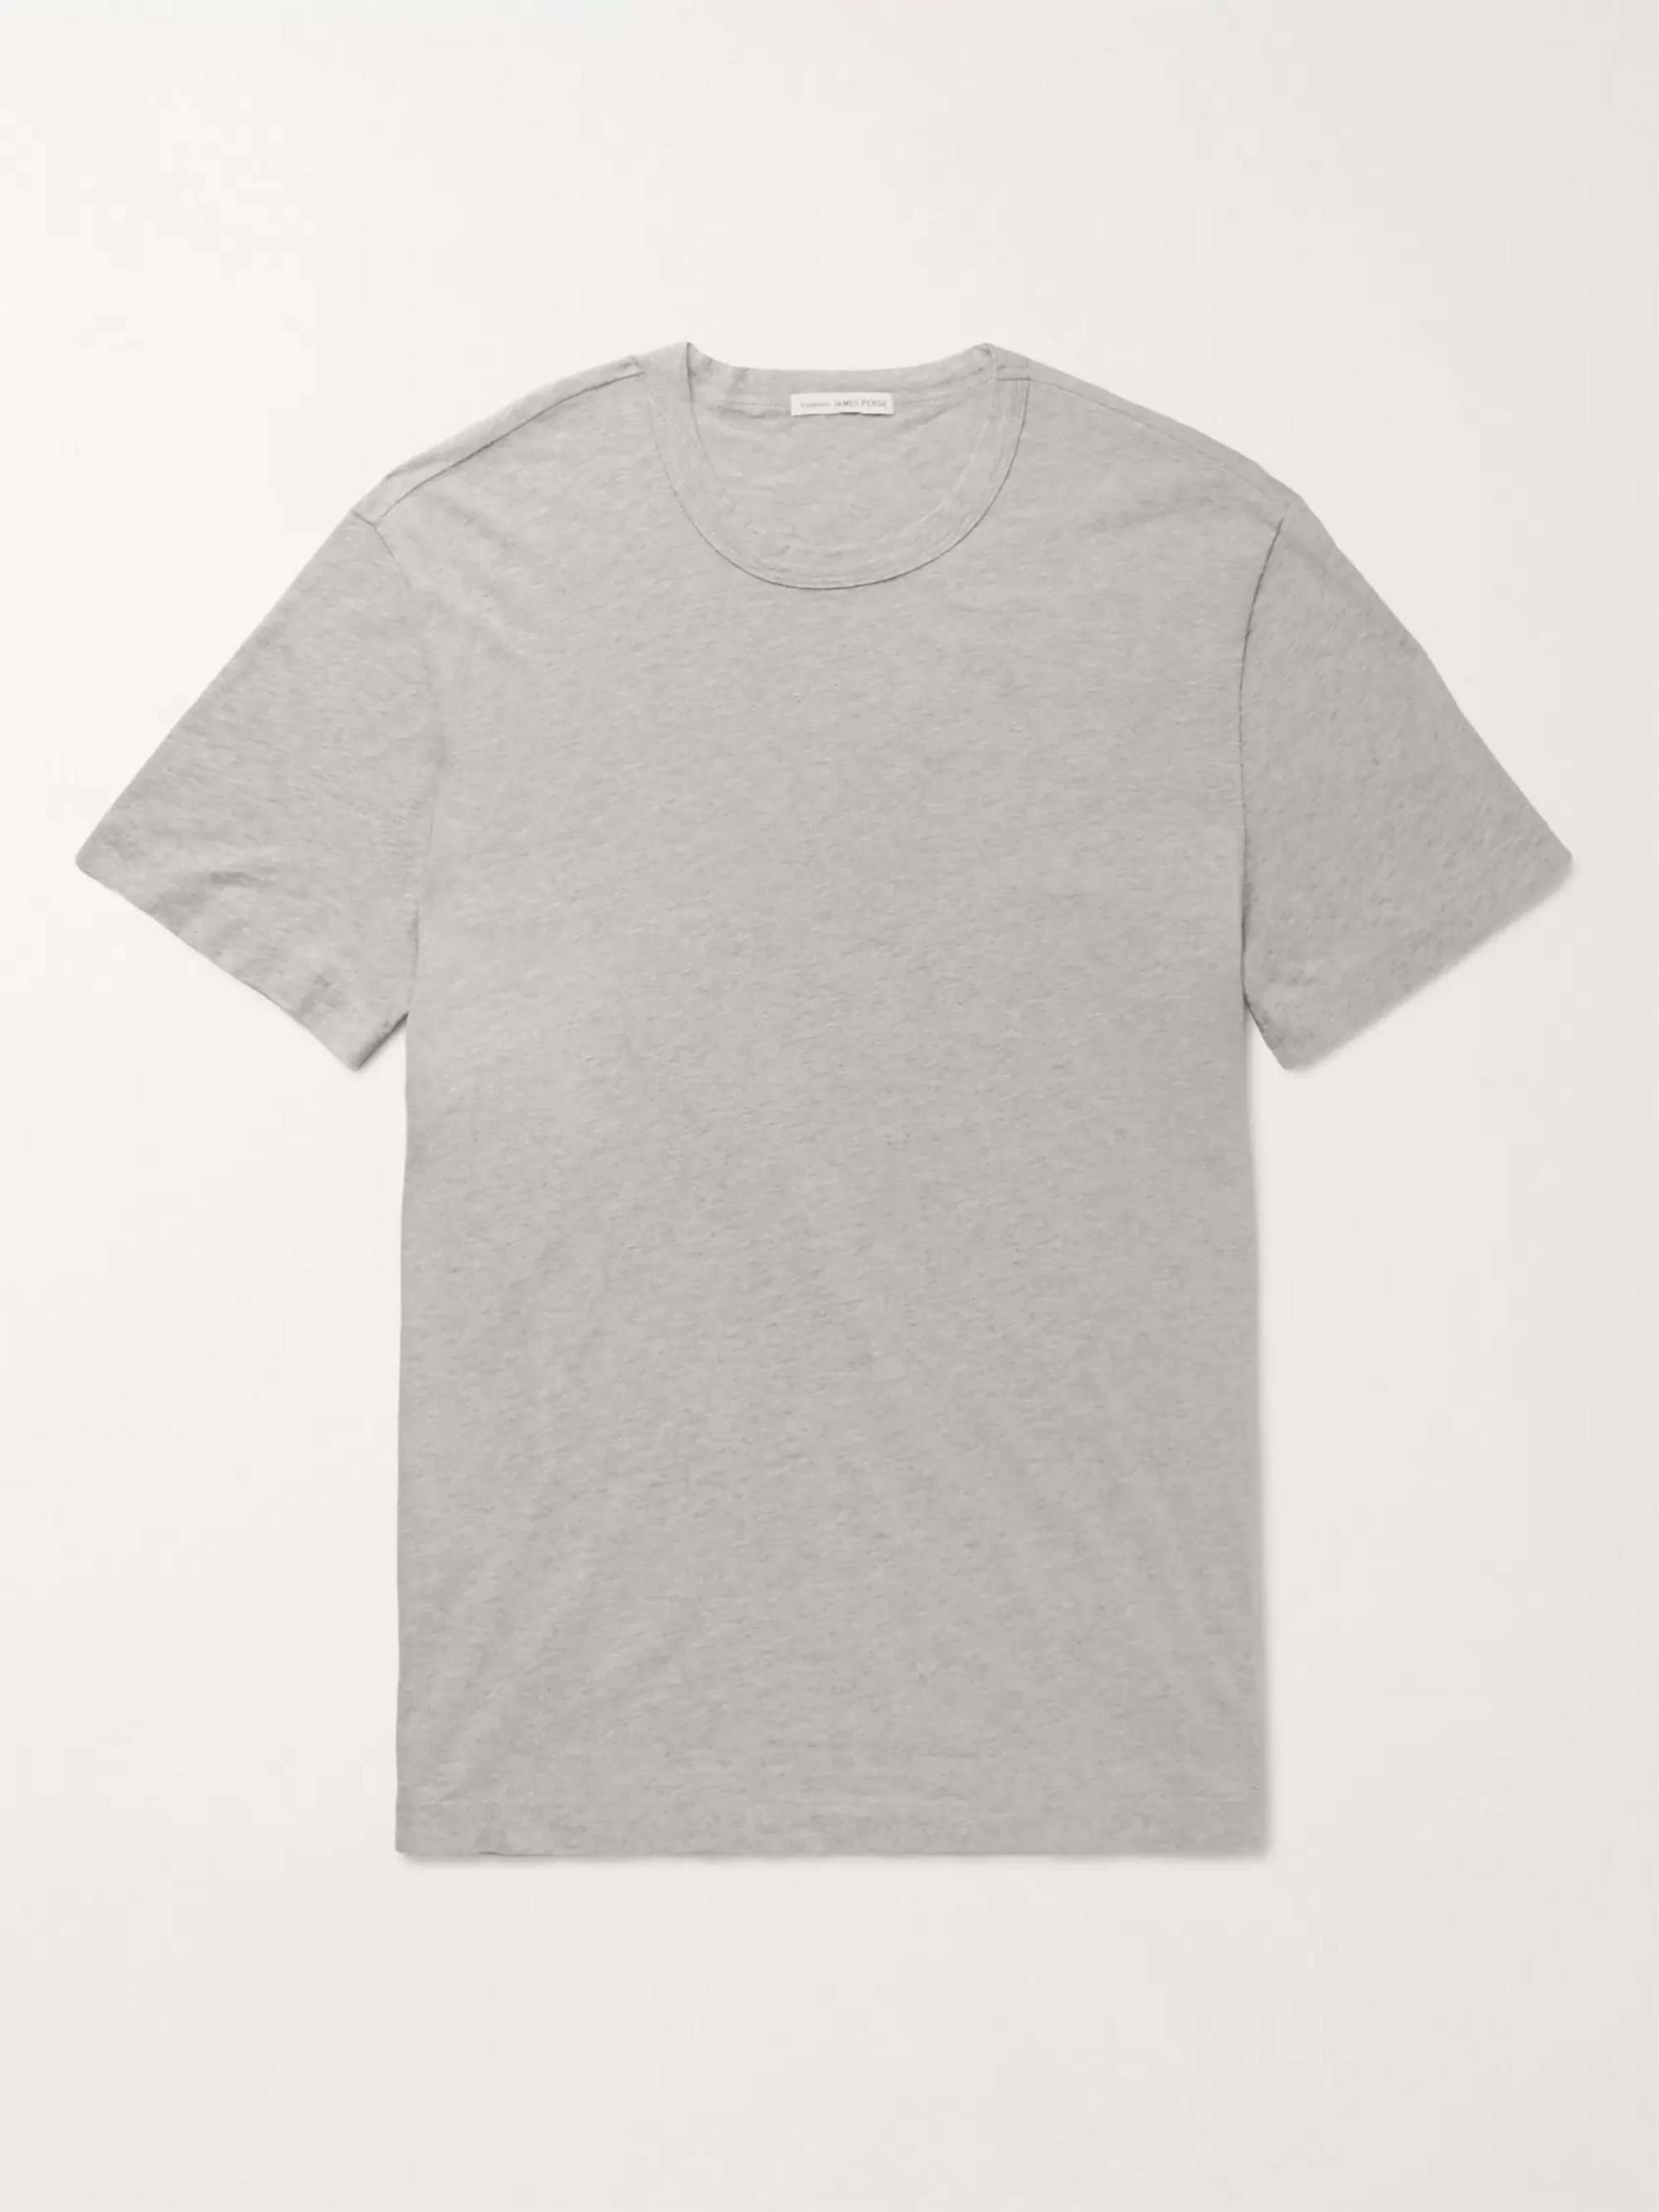 JAMES PERSE Slim-Fit Cotton-Jersey T-Shirt for Men | MR PORTER